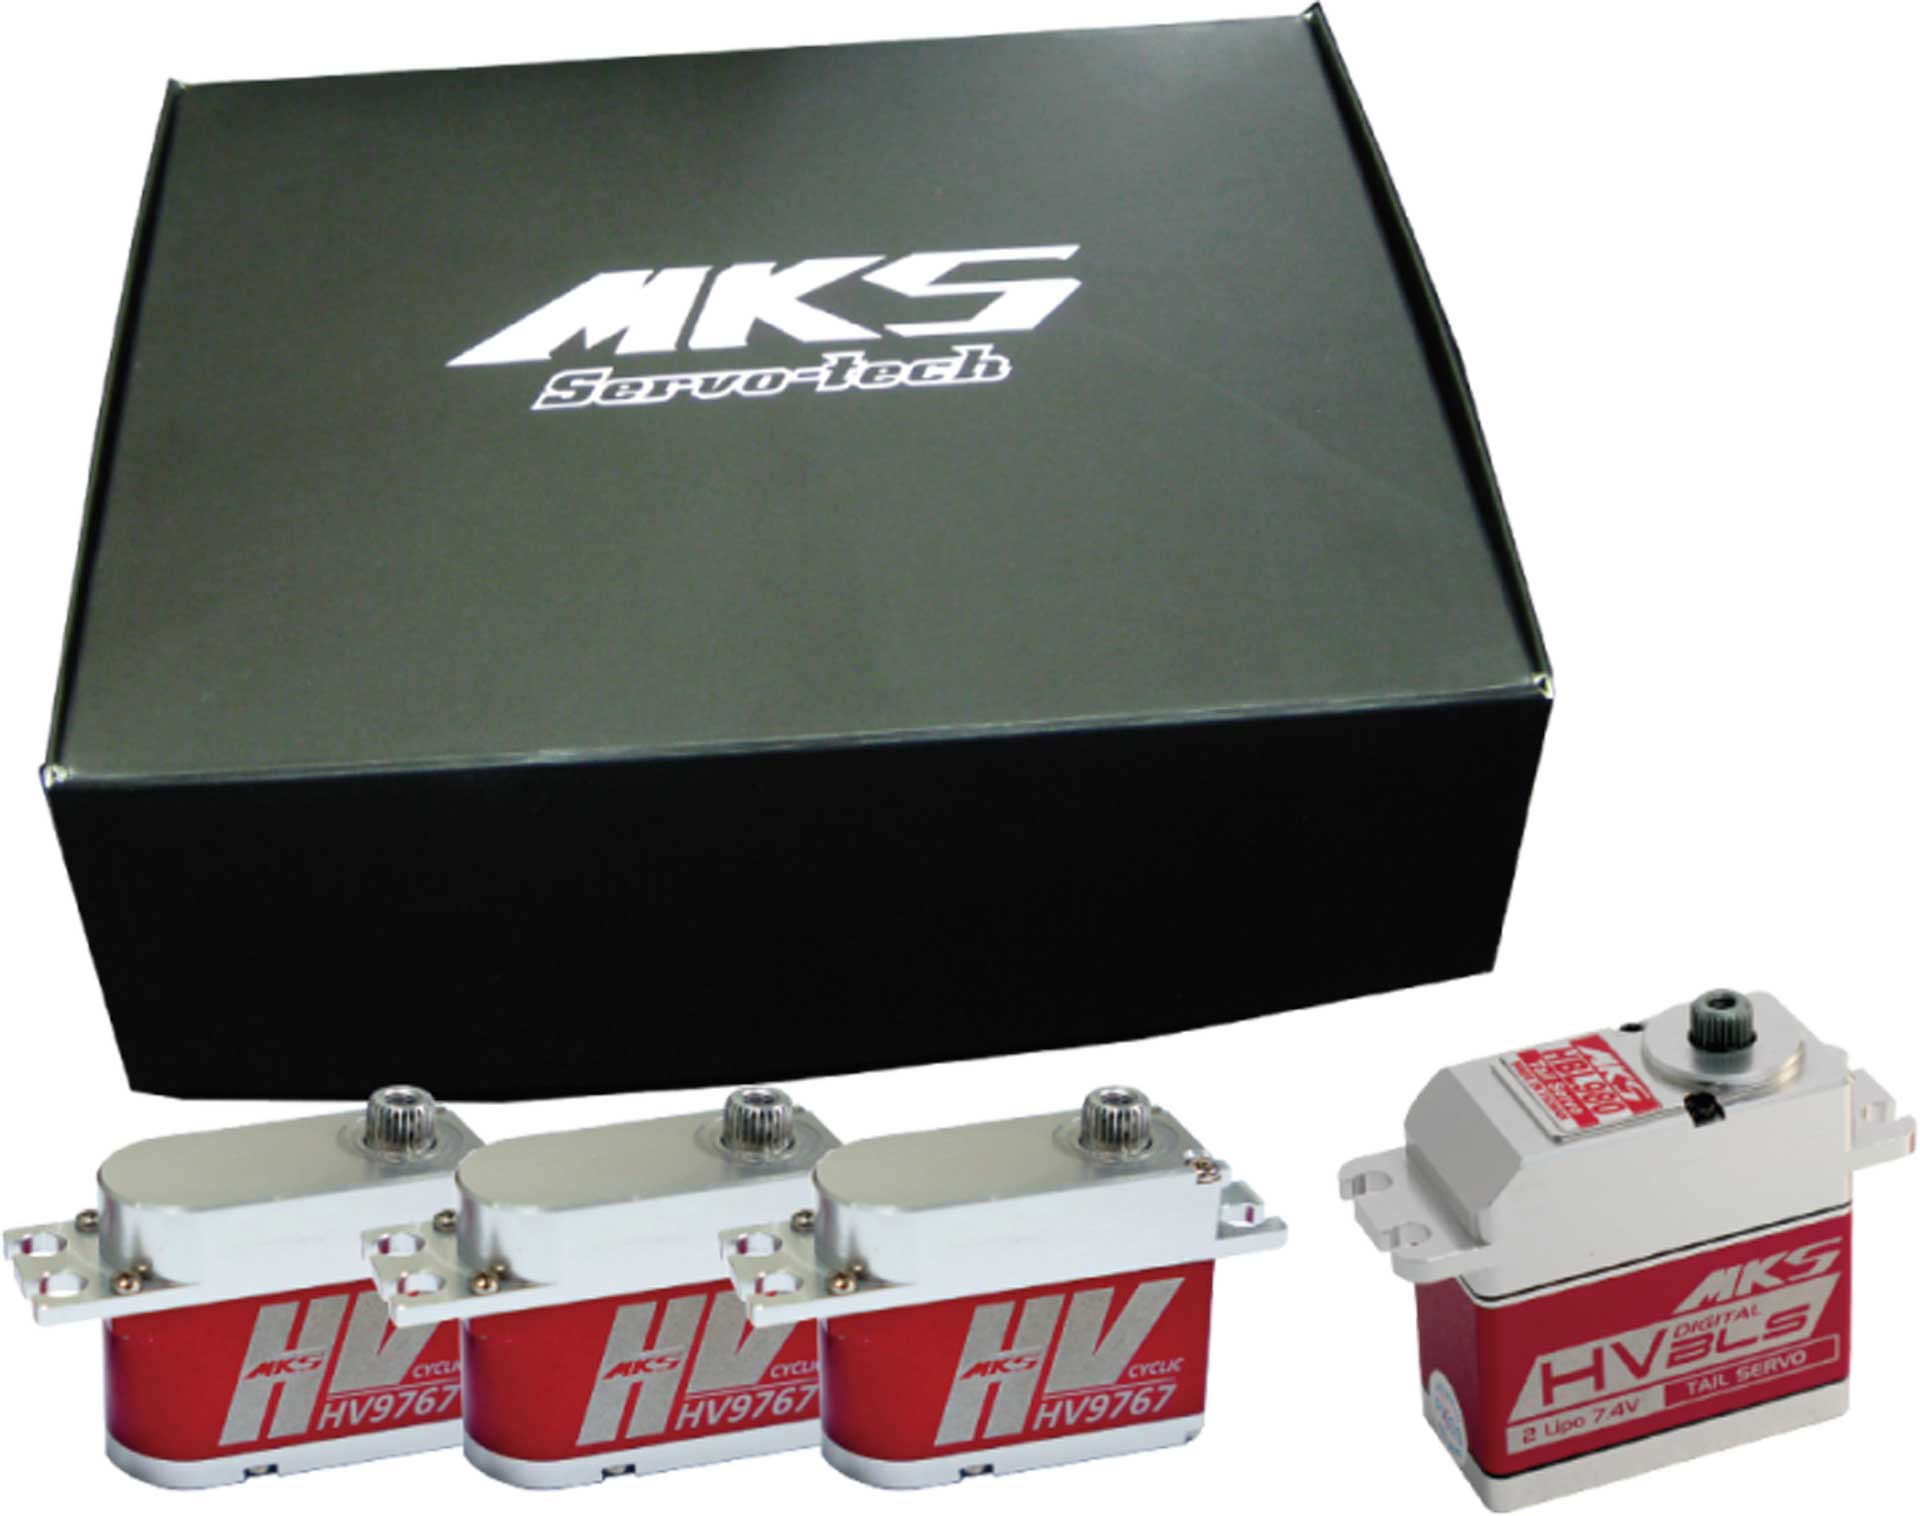 MKS 3x HV9767 und 1x HBL980 HV Digital Servo combo